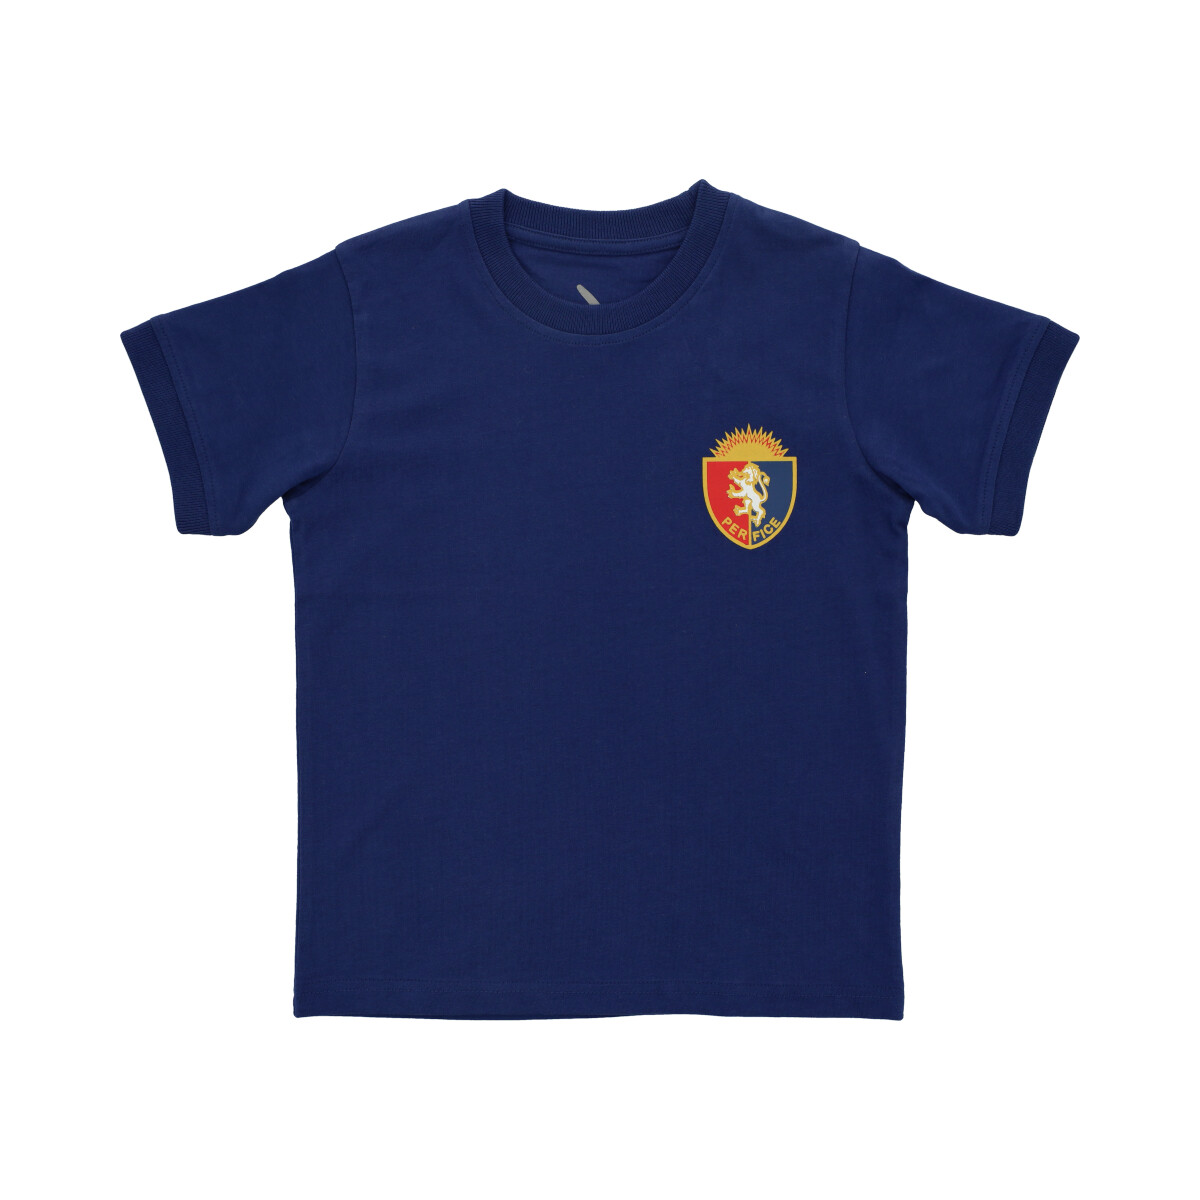 House T-shirts - Navy 